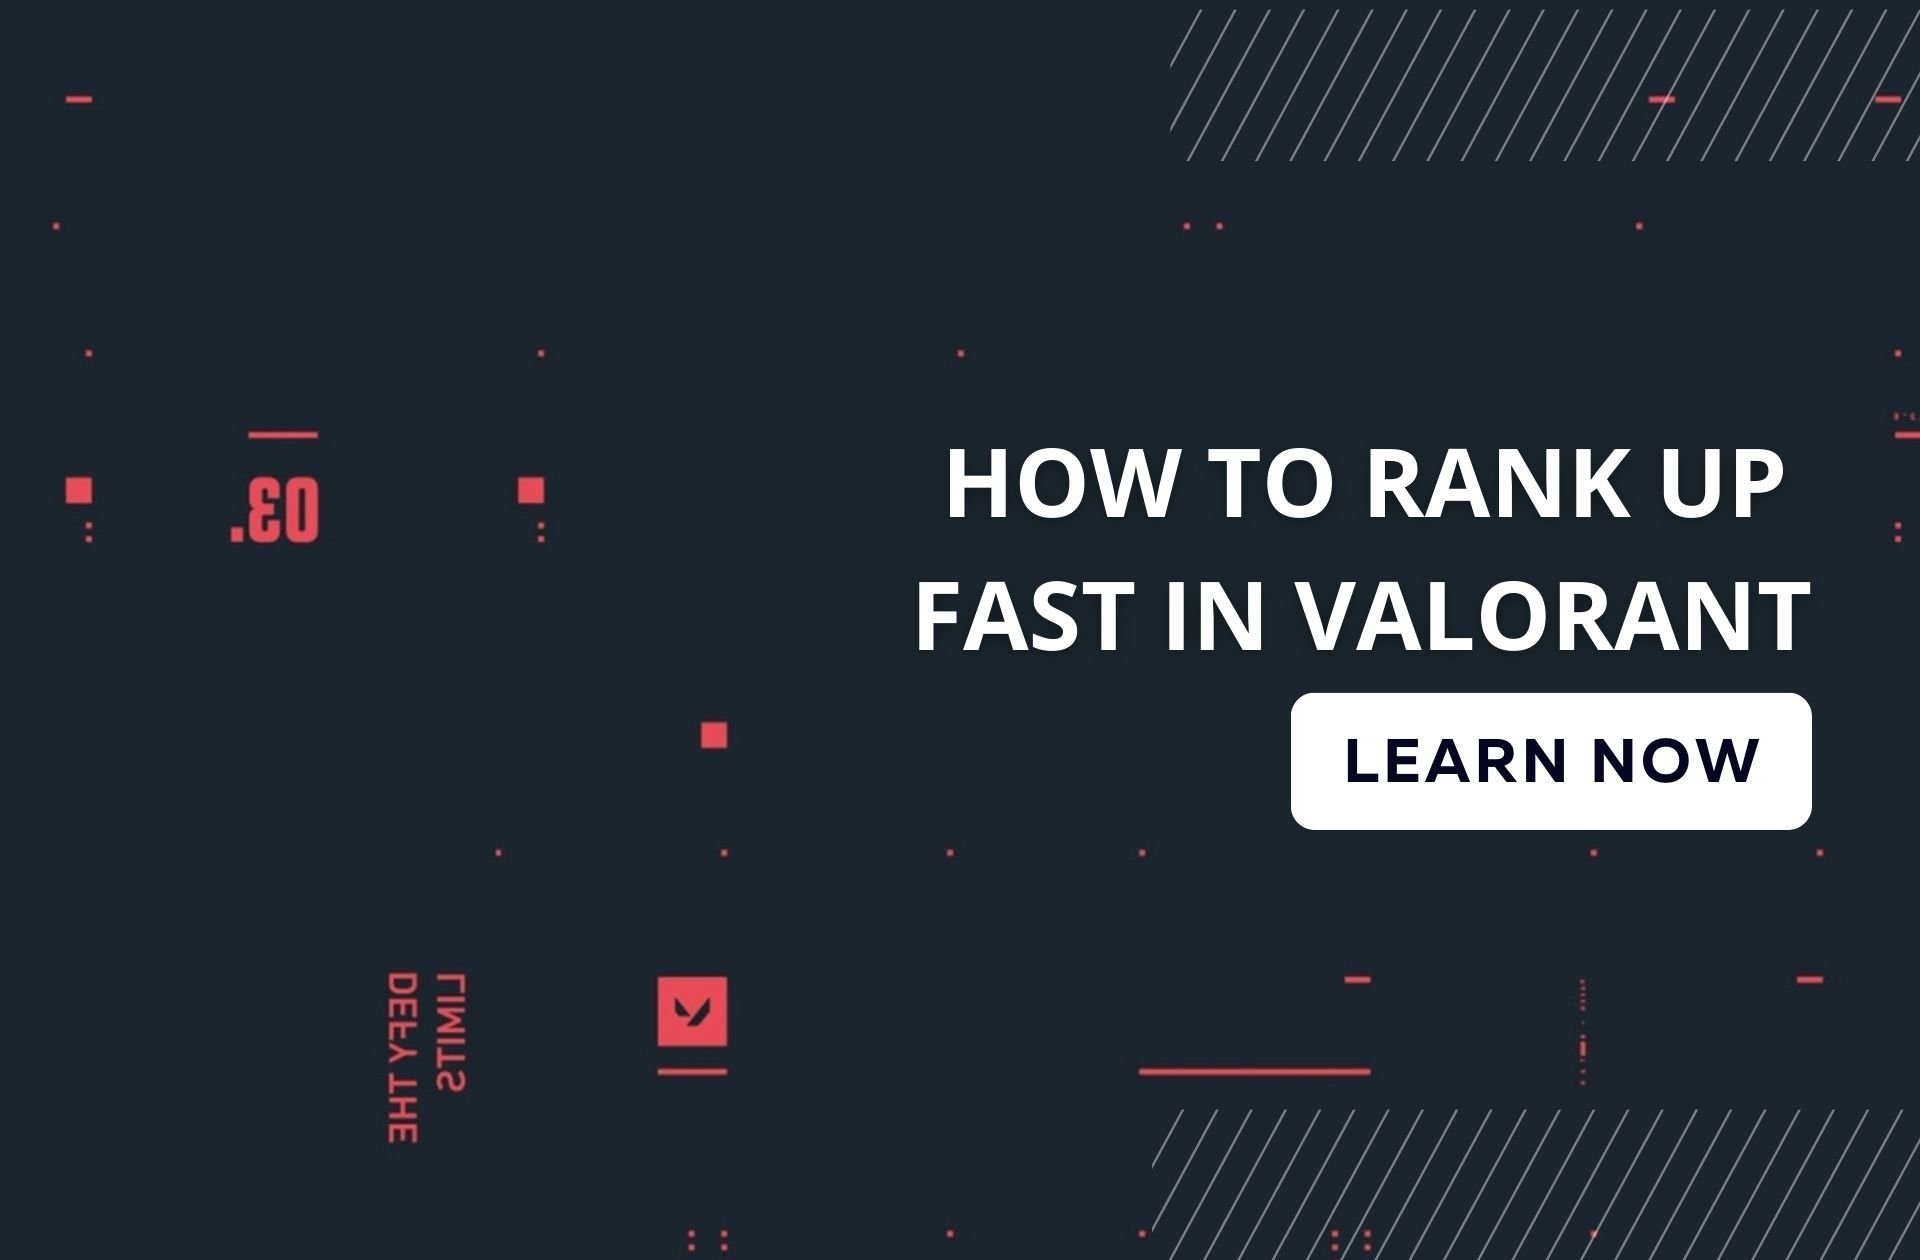 5 Valorant aim training routines that will make ranked climb